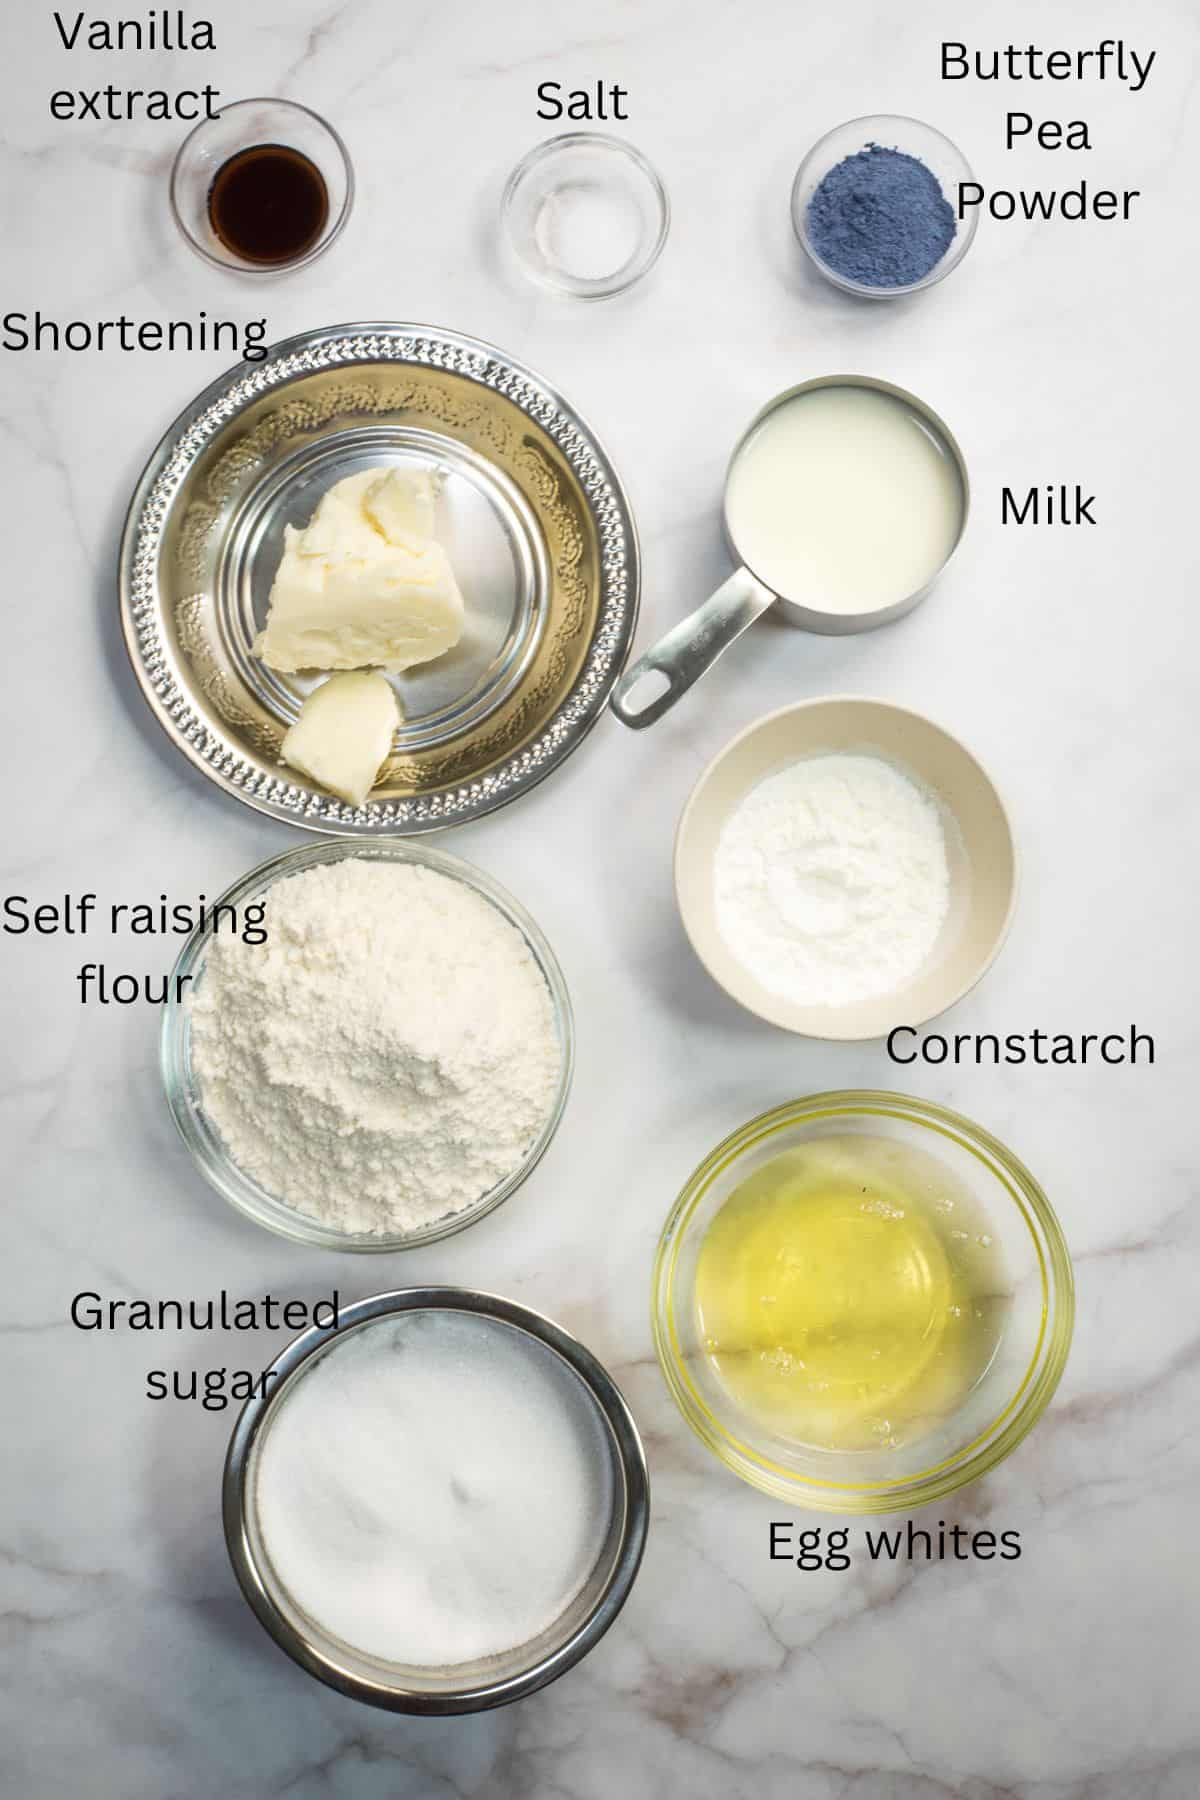 Self raising flour, granulated sugar, egg whites, shortening, milk, cornstarch, butterfly pea flower powder and salt in bowls against a marble background.